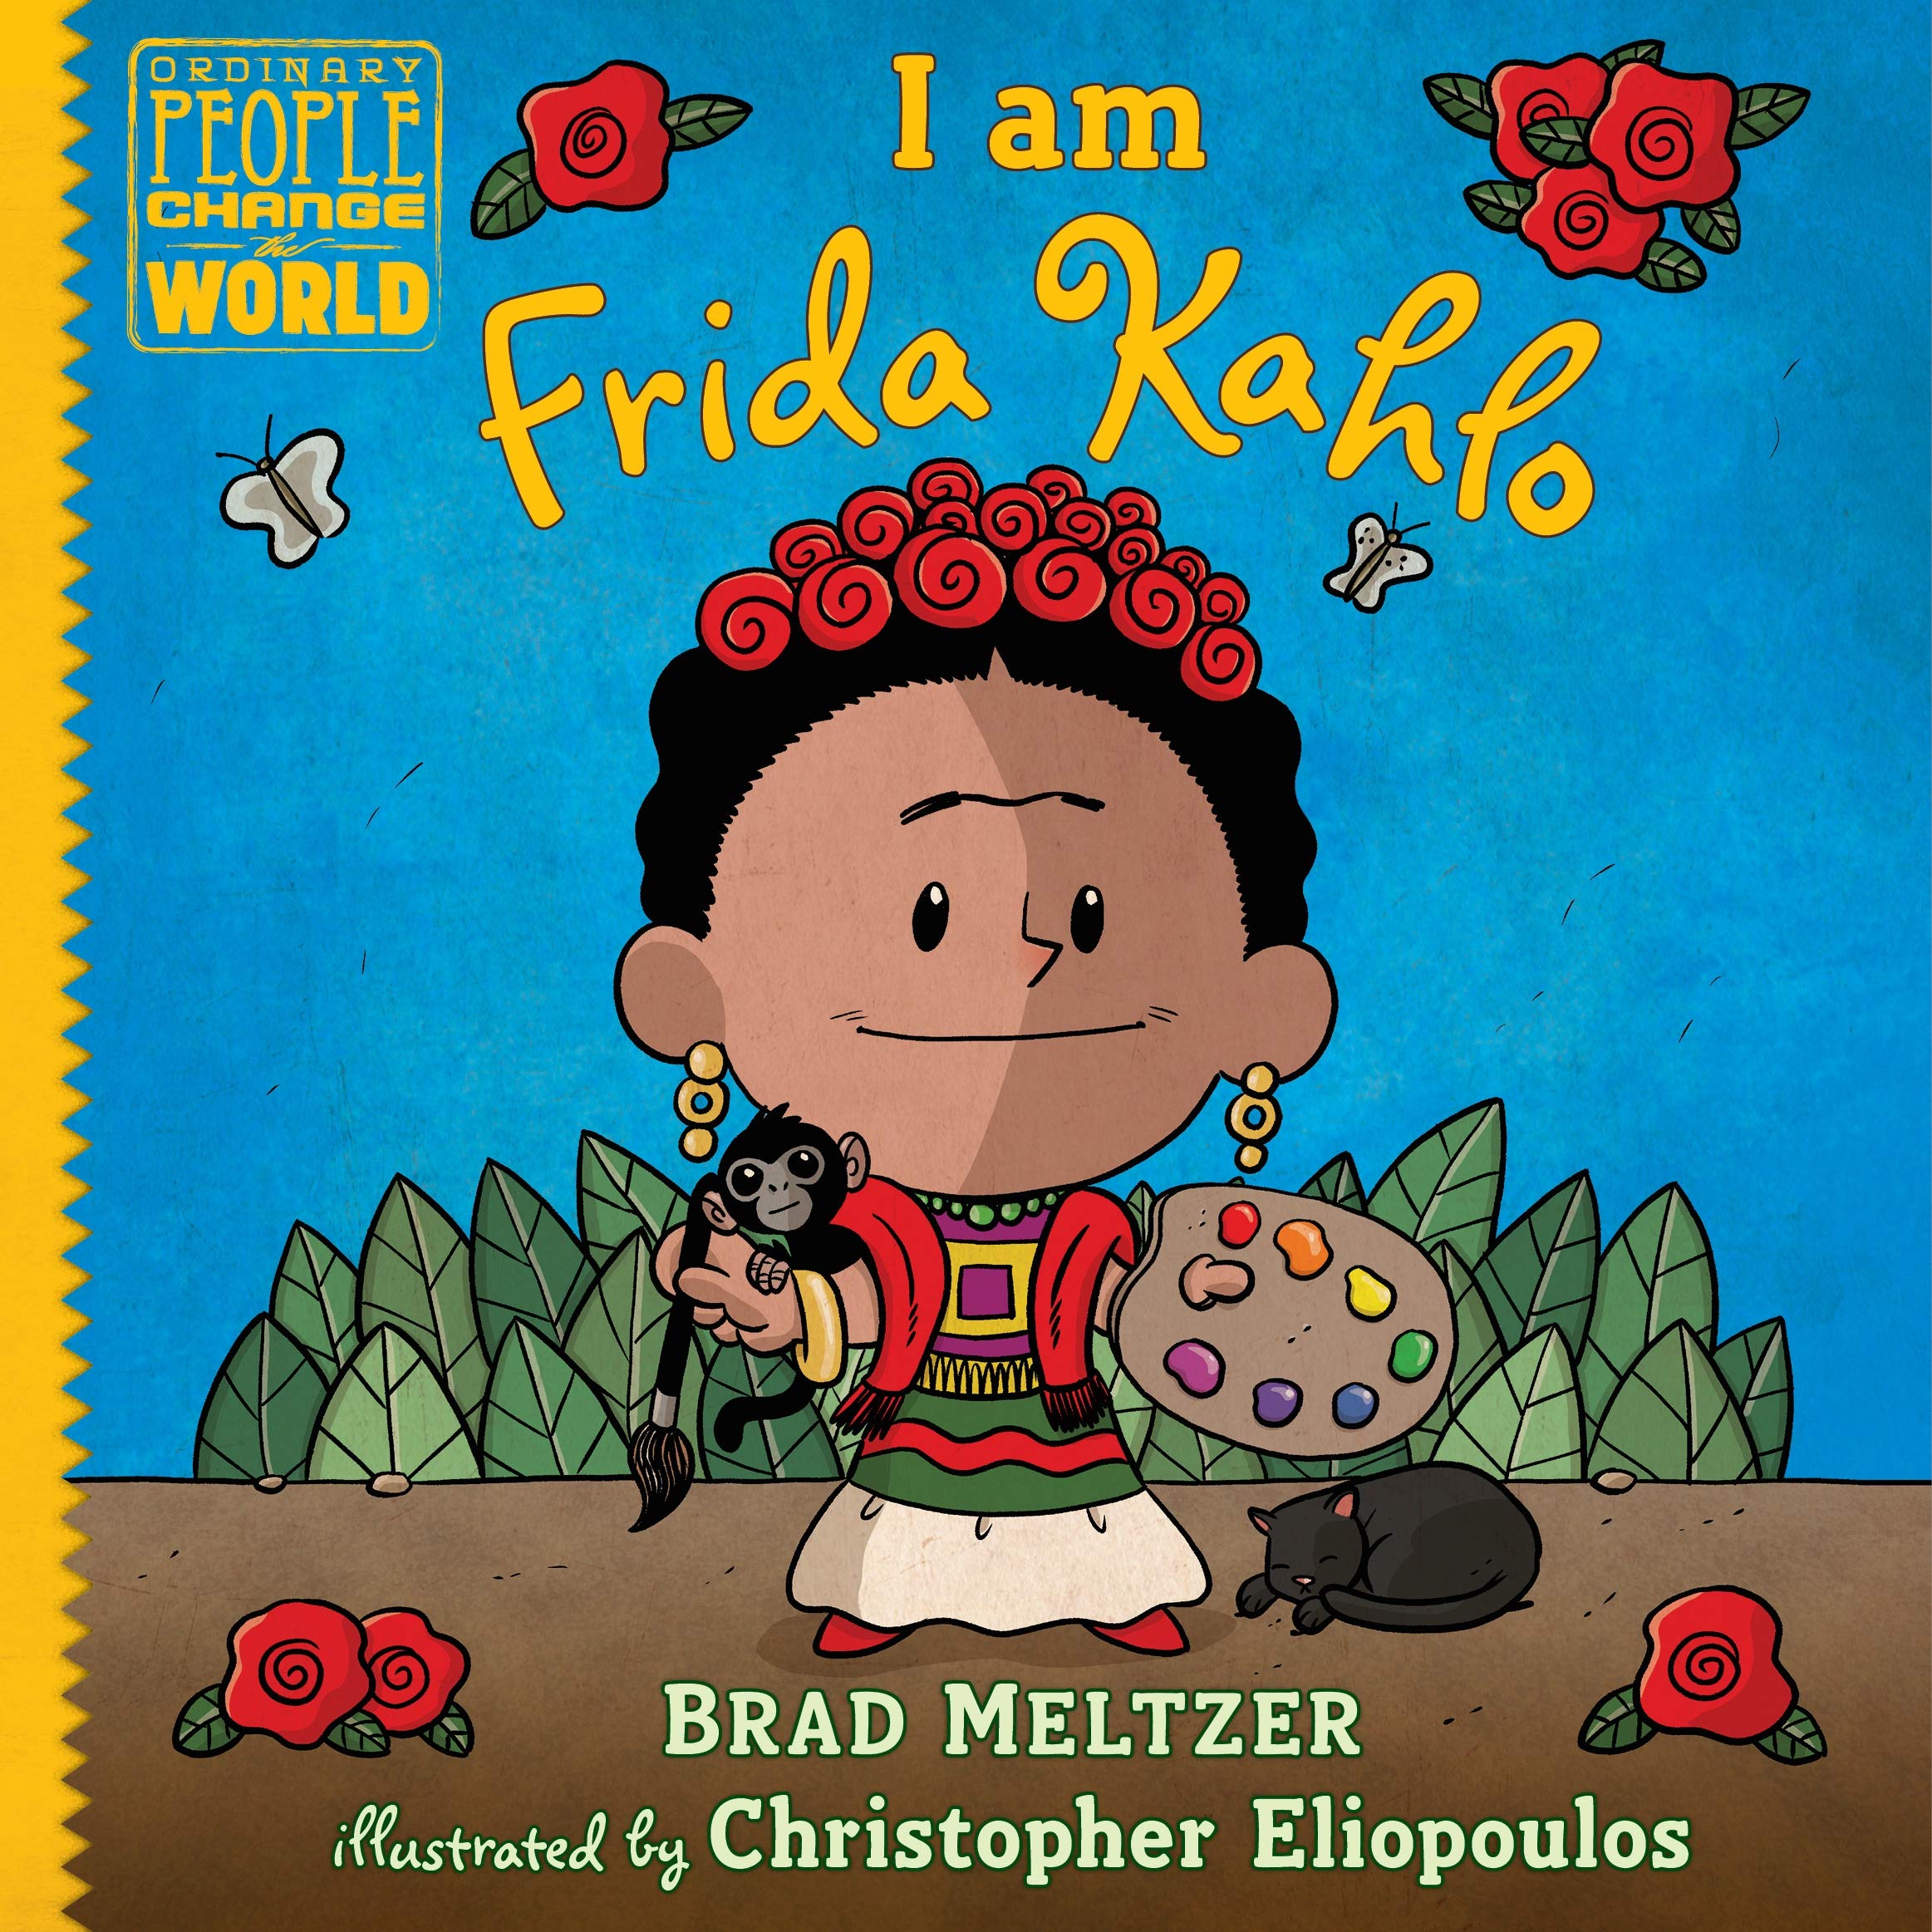 I Am Frida Kahlo & I Am Oprah Winfrey by Brad Meltzer